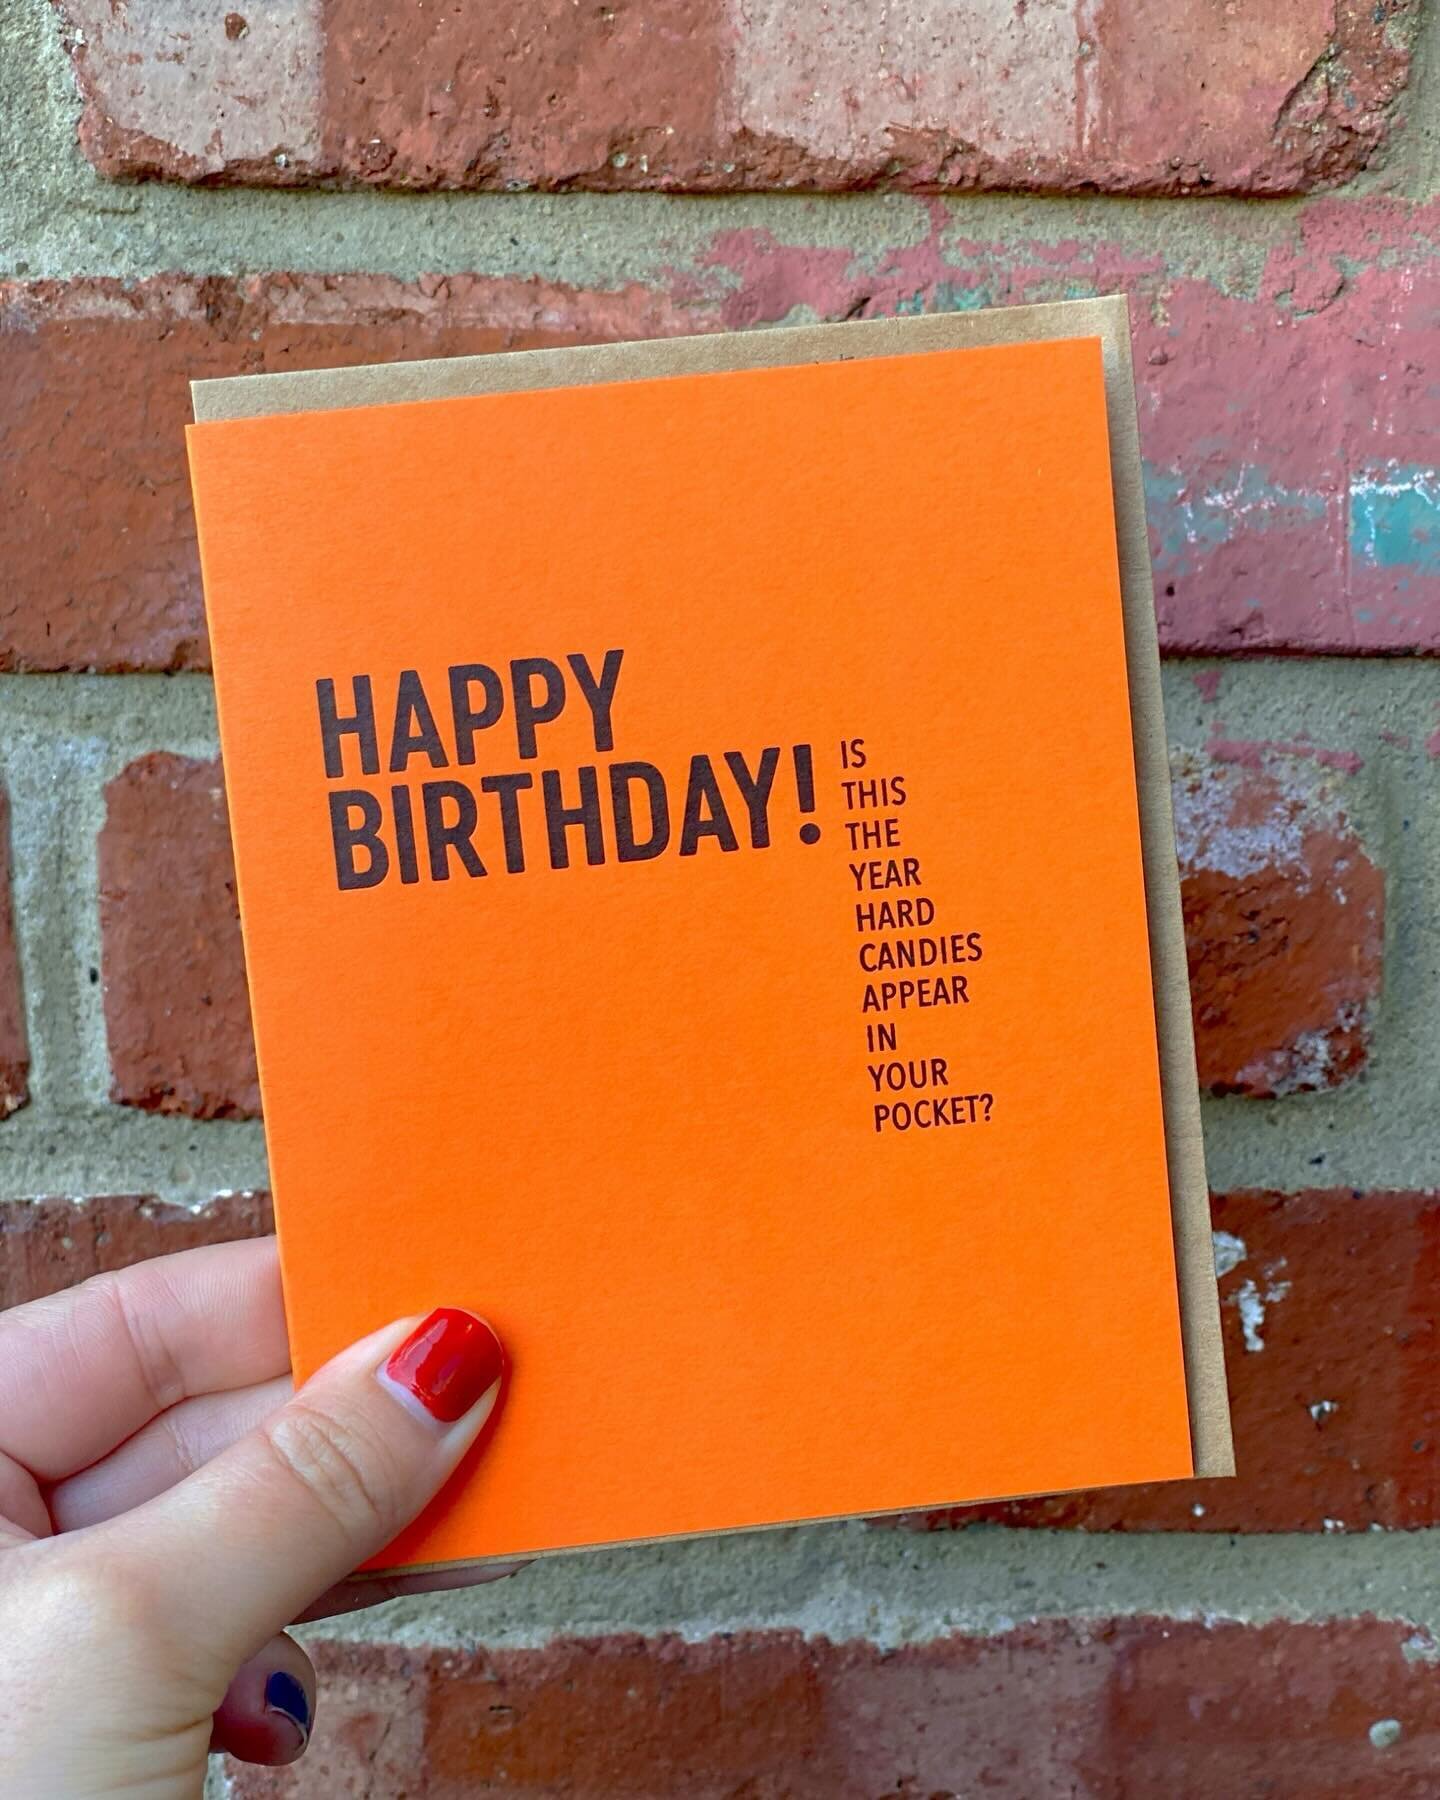 New, sassy birthday cards from @saplingpress 😂🩷